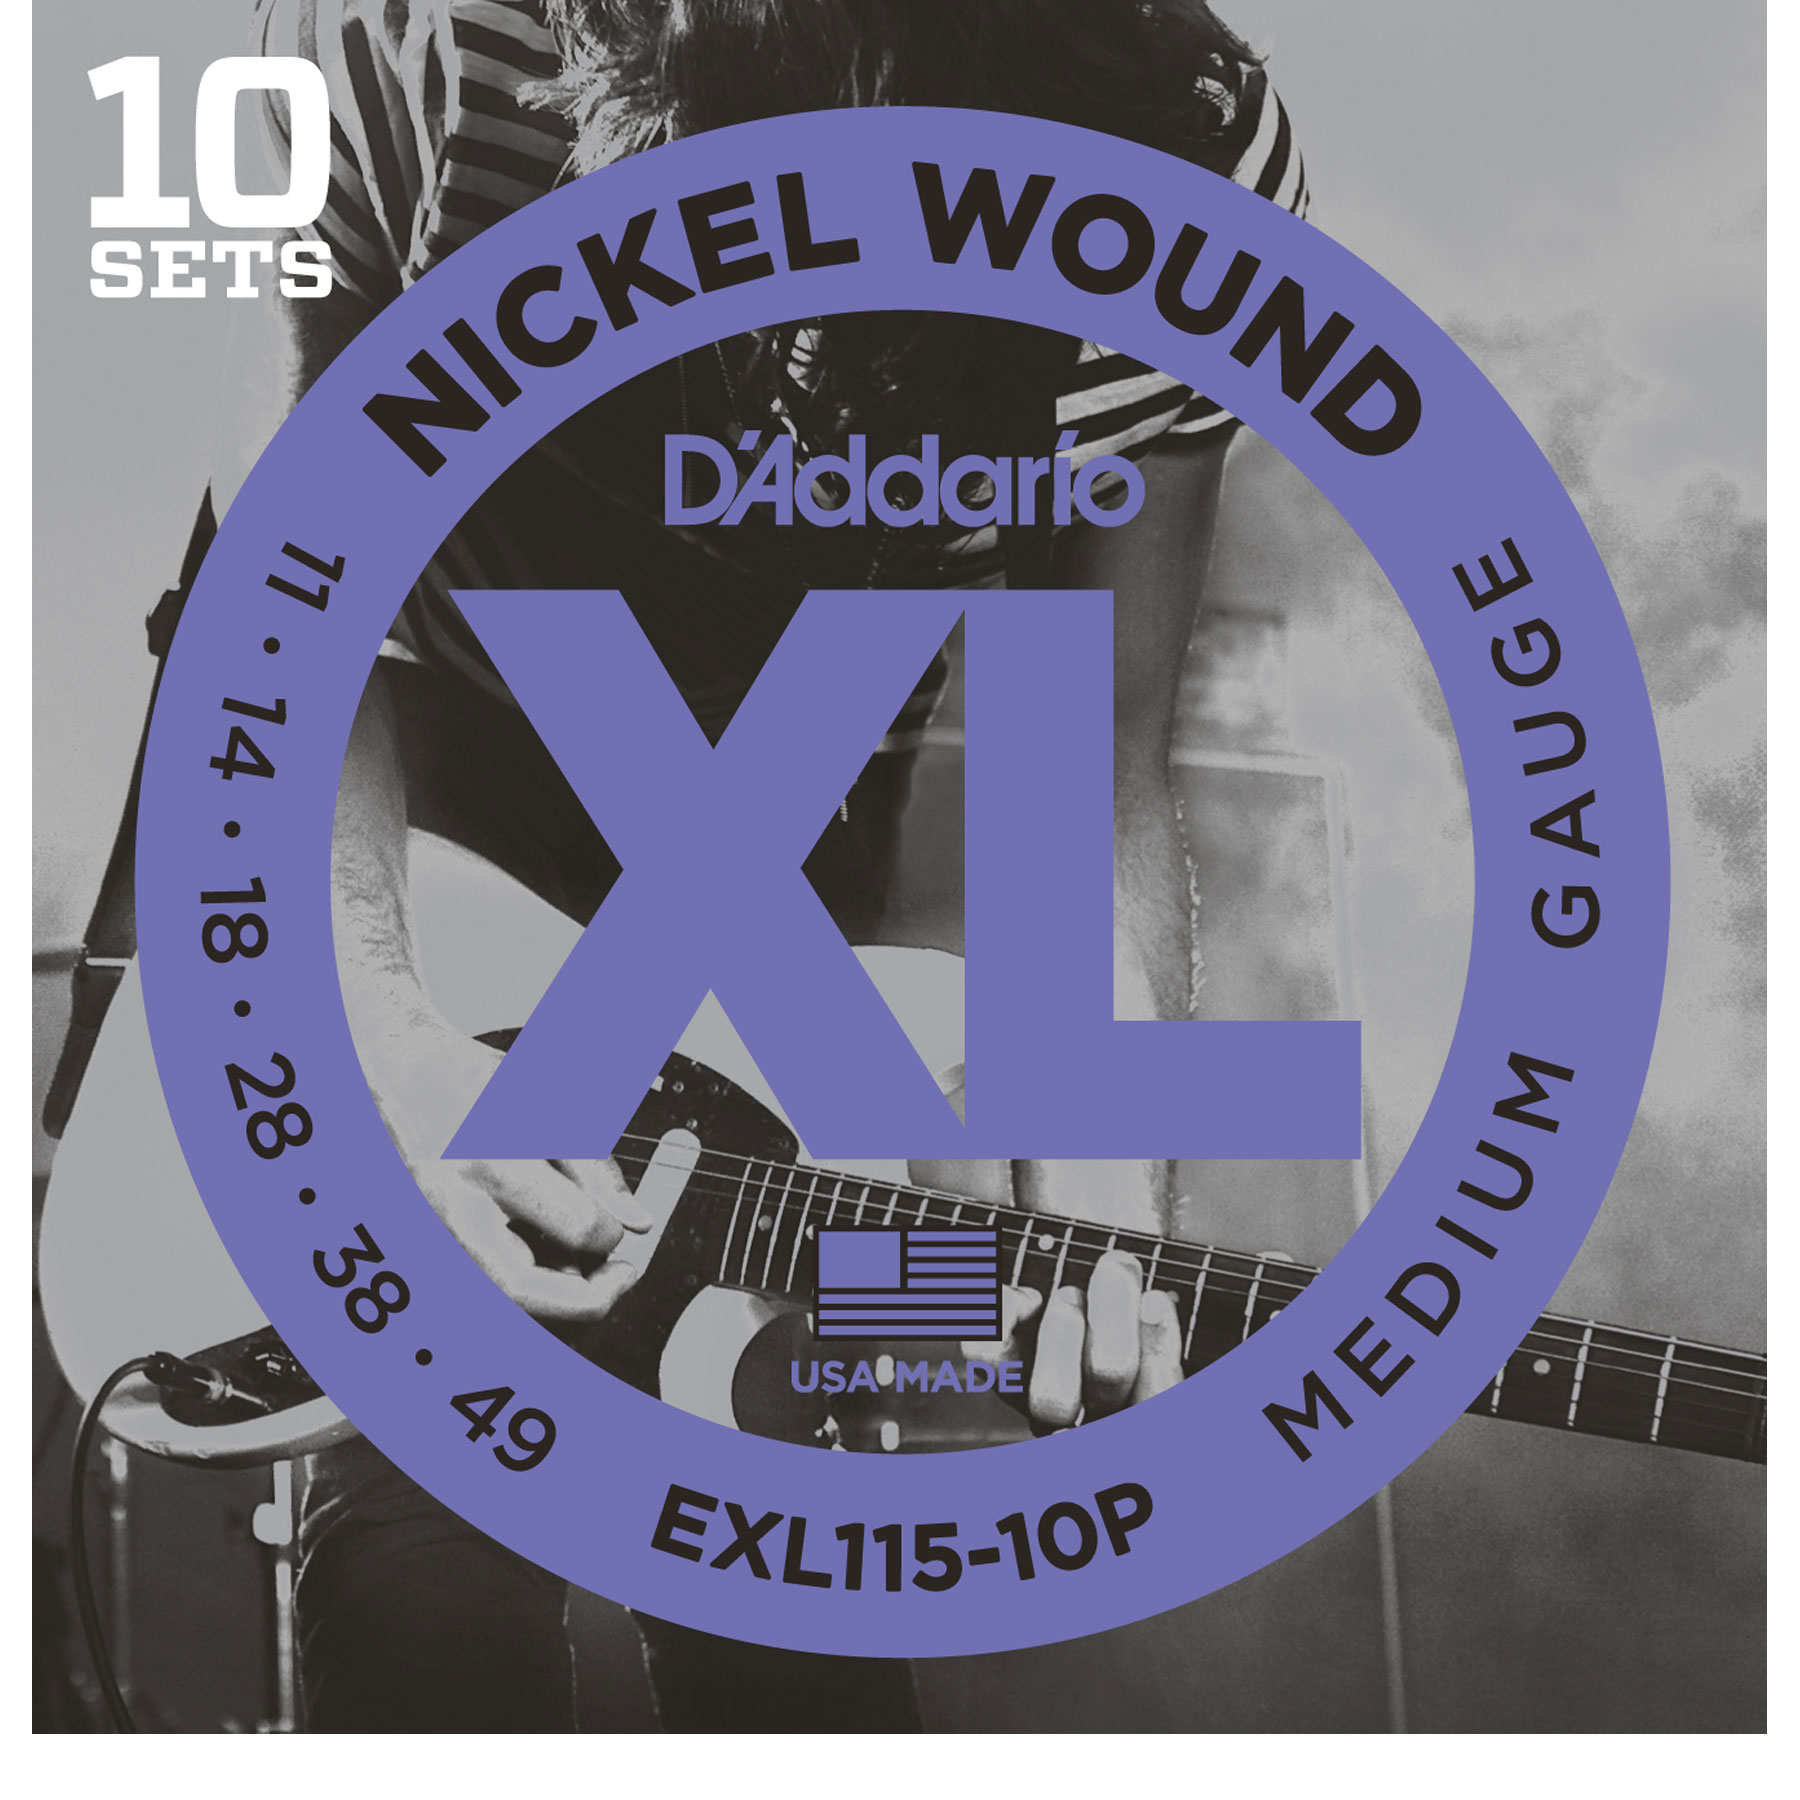 D'Addario XL Nickel Wound Electric Guitar Strings, 10-pack